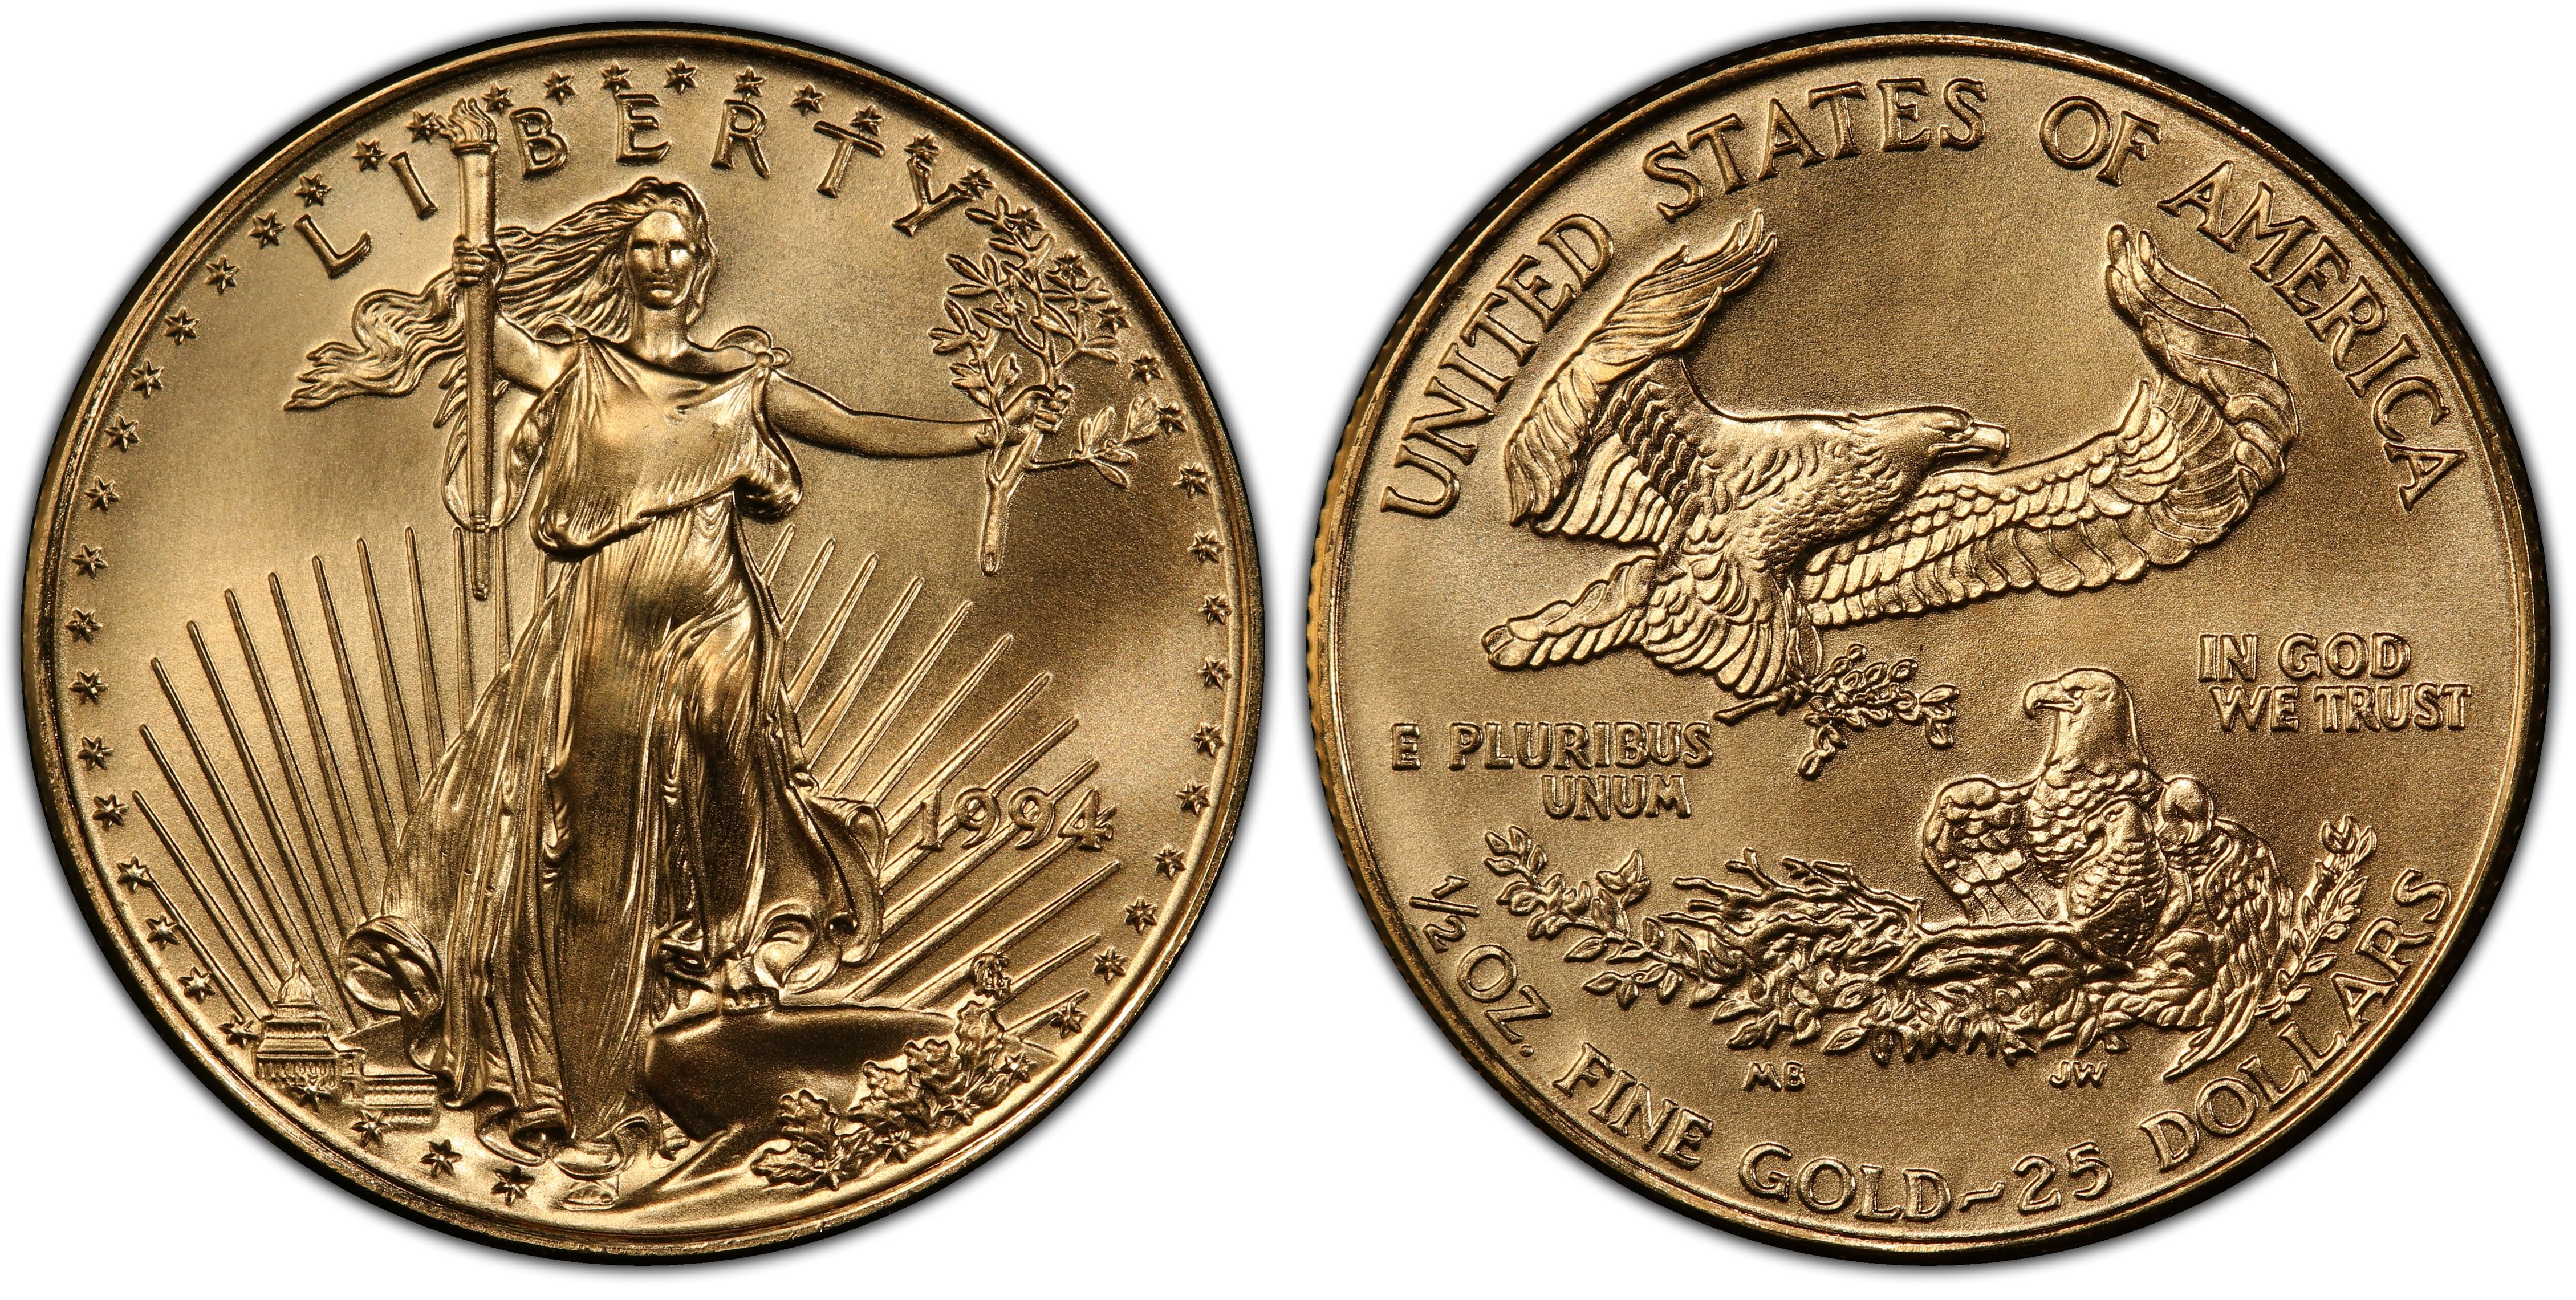 Gold Eagle $25 GEM Coin Gold American Eagle PCGS MS-69 1994 1/2 oz 